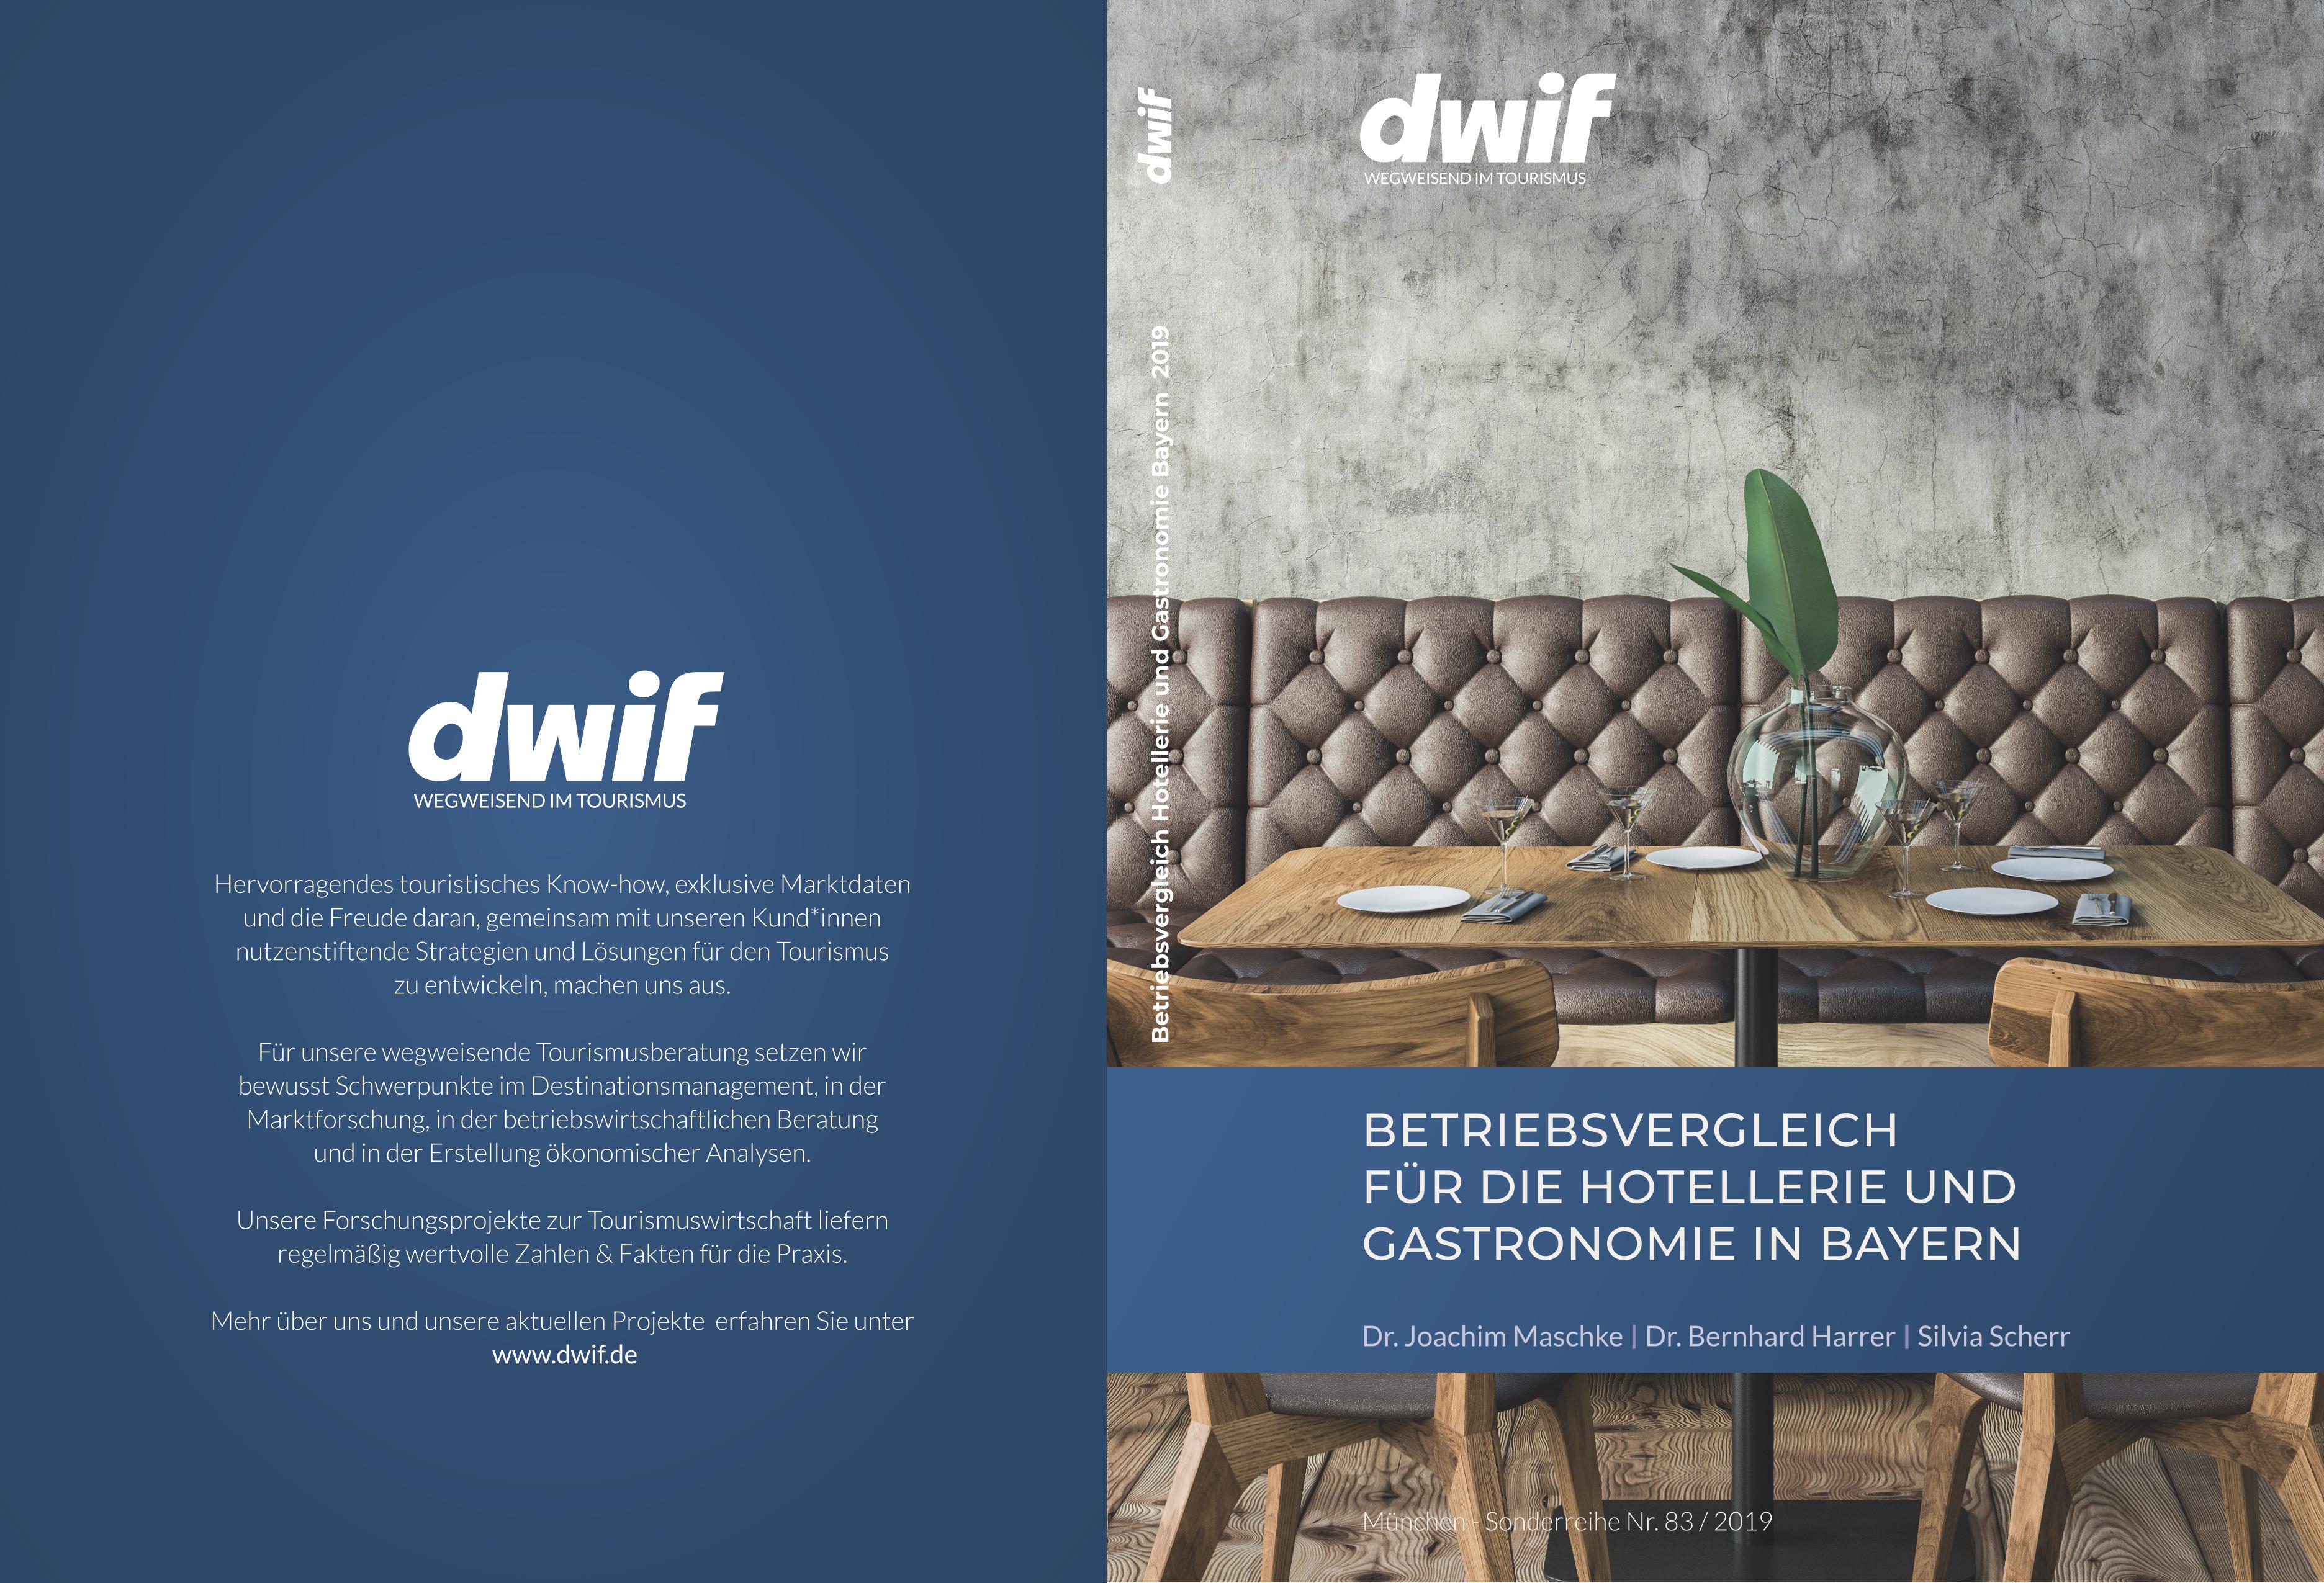 Betriebsvergleich Hotellerie Gastronomie Bayern 2019 Cover dwif